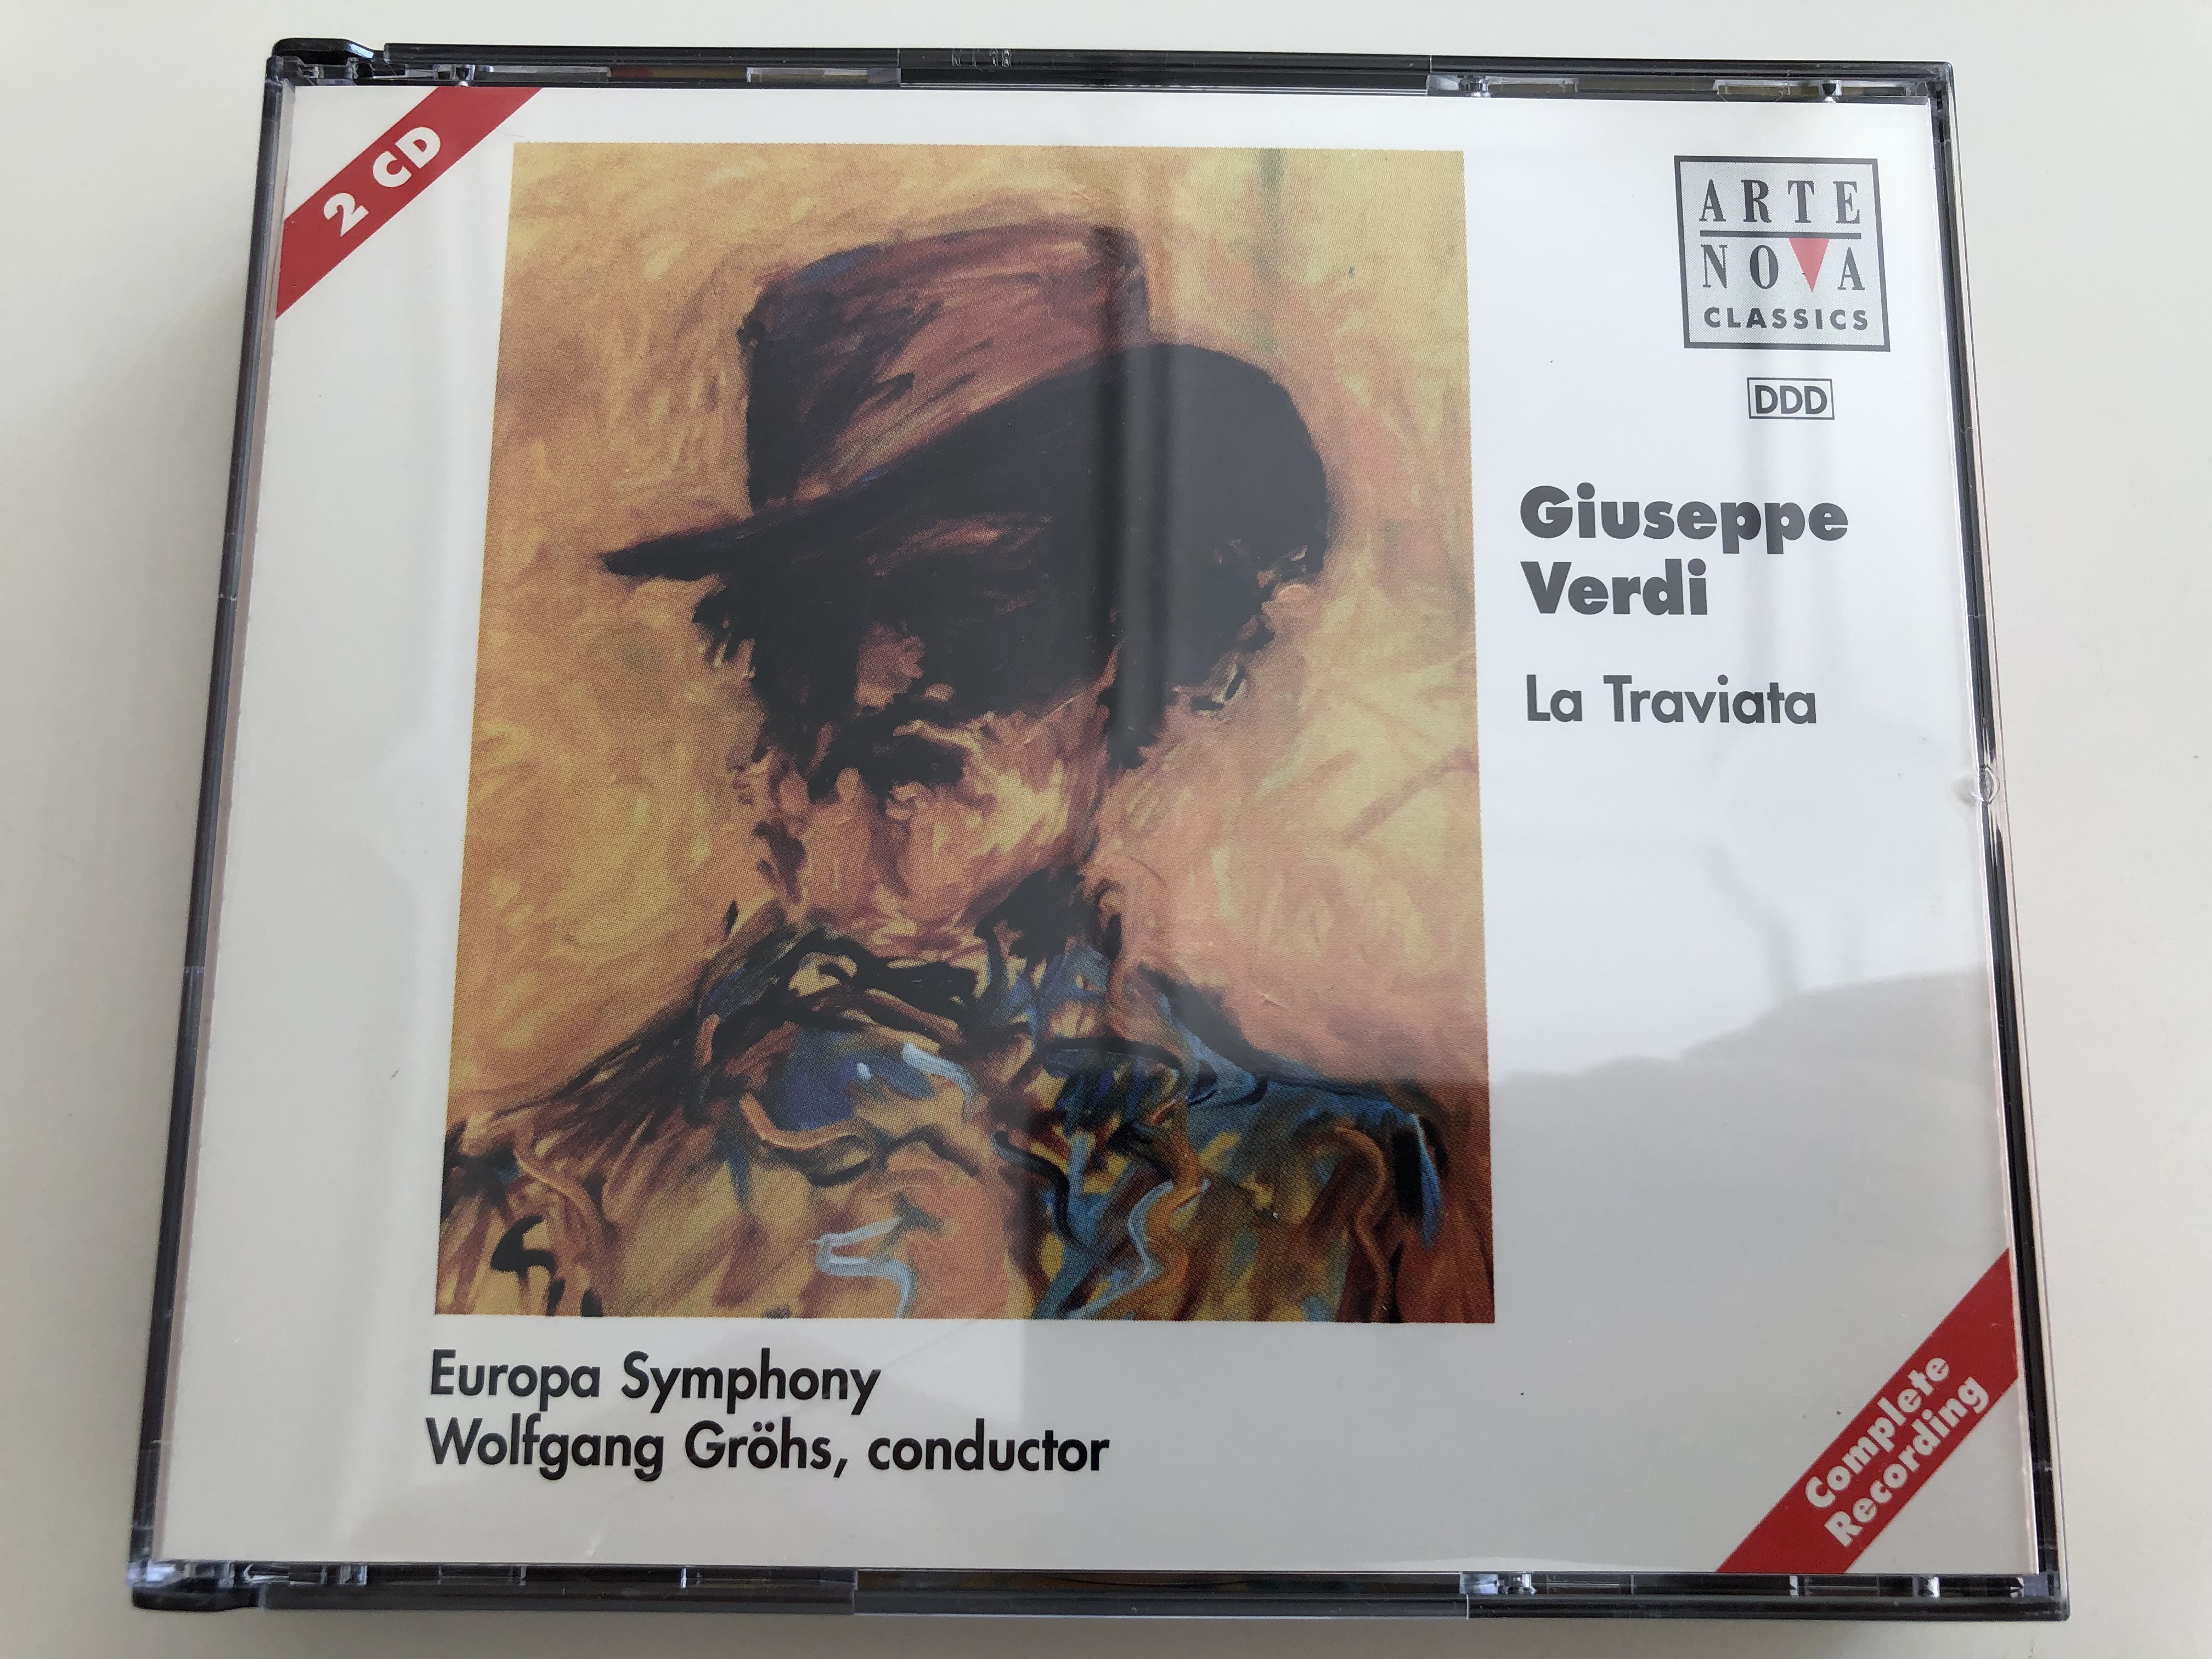 giuseppe-verdi-la-traviata-2-cd-europa-symphony-wolfgang-gr-hs-conductor-arte-nova-classics-audio-cd-1996-complete-recording-1-.jpg